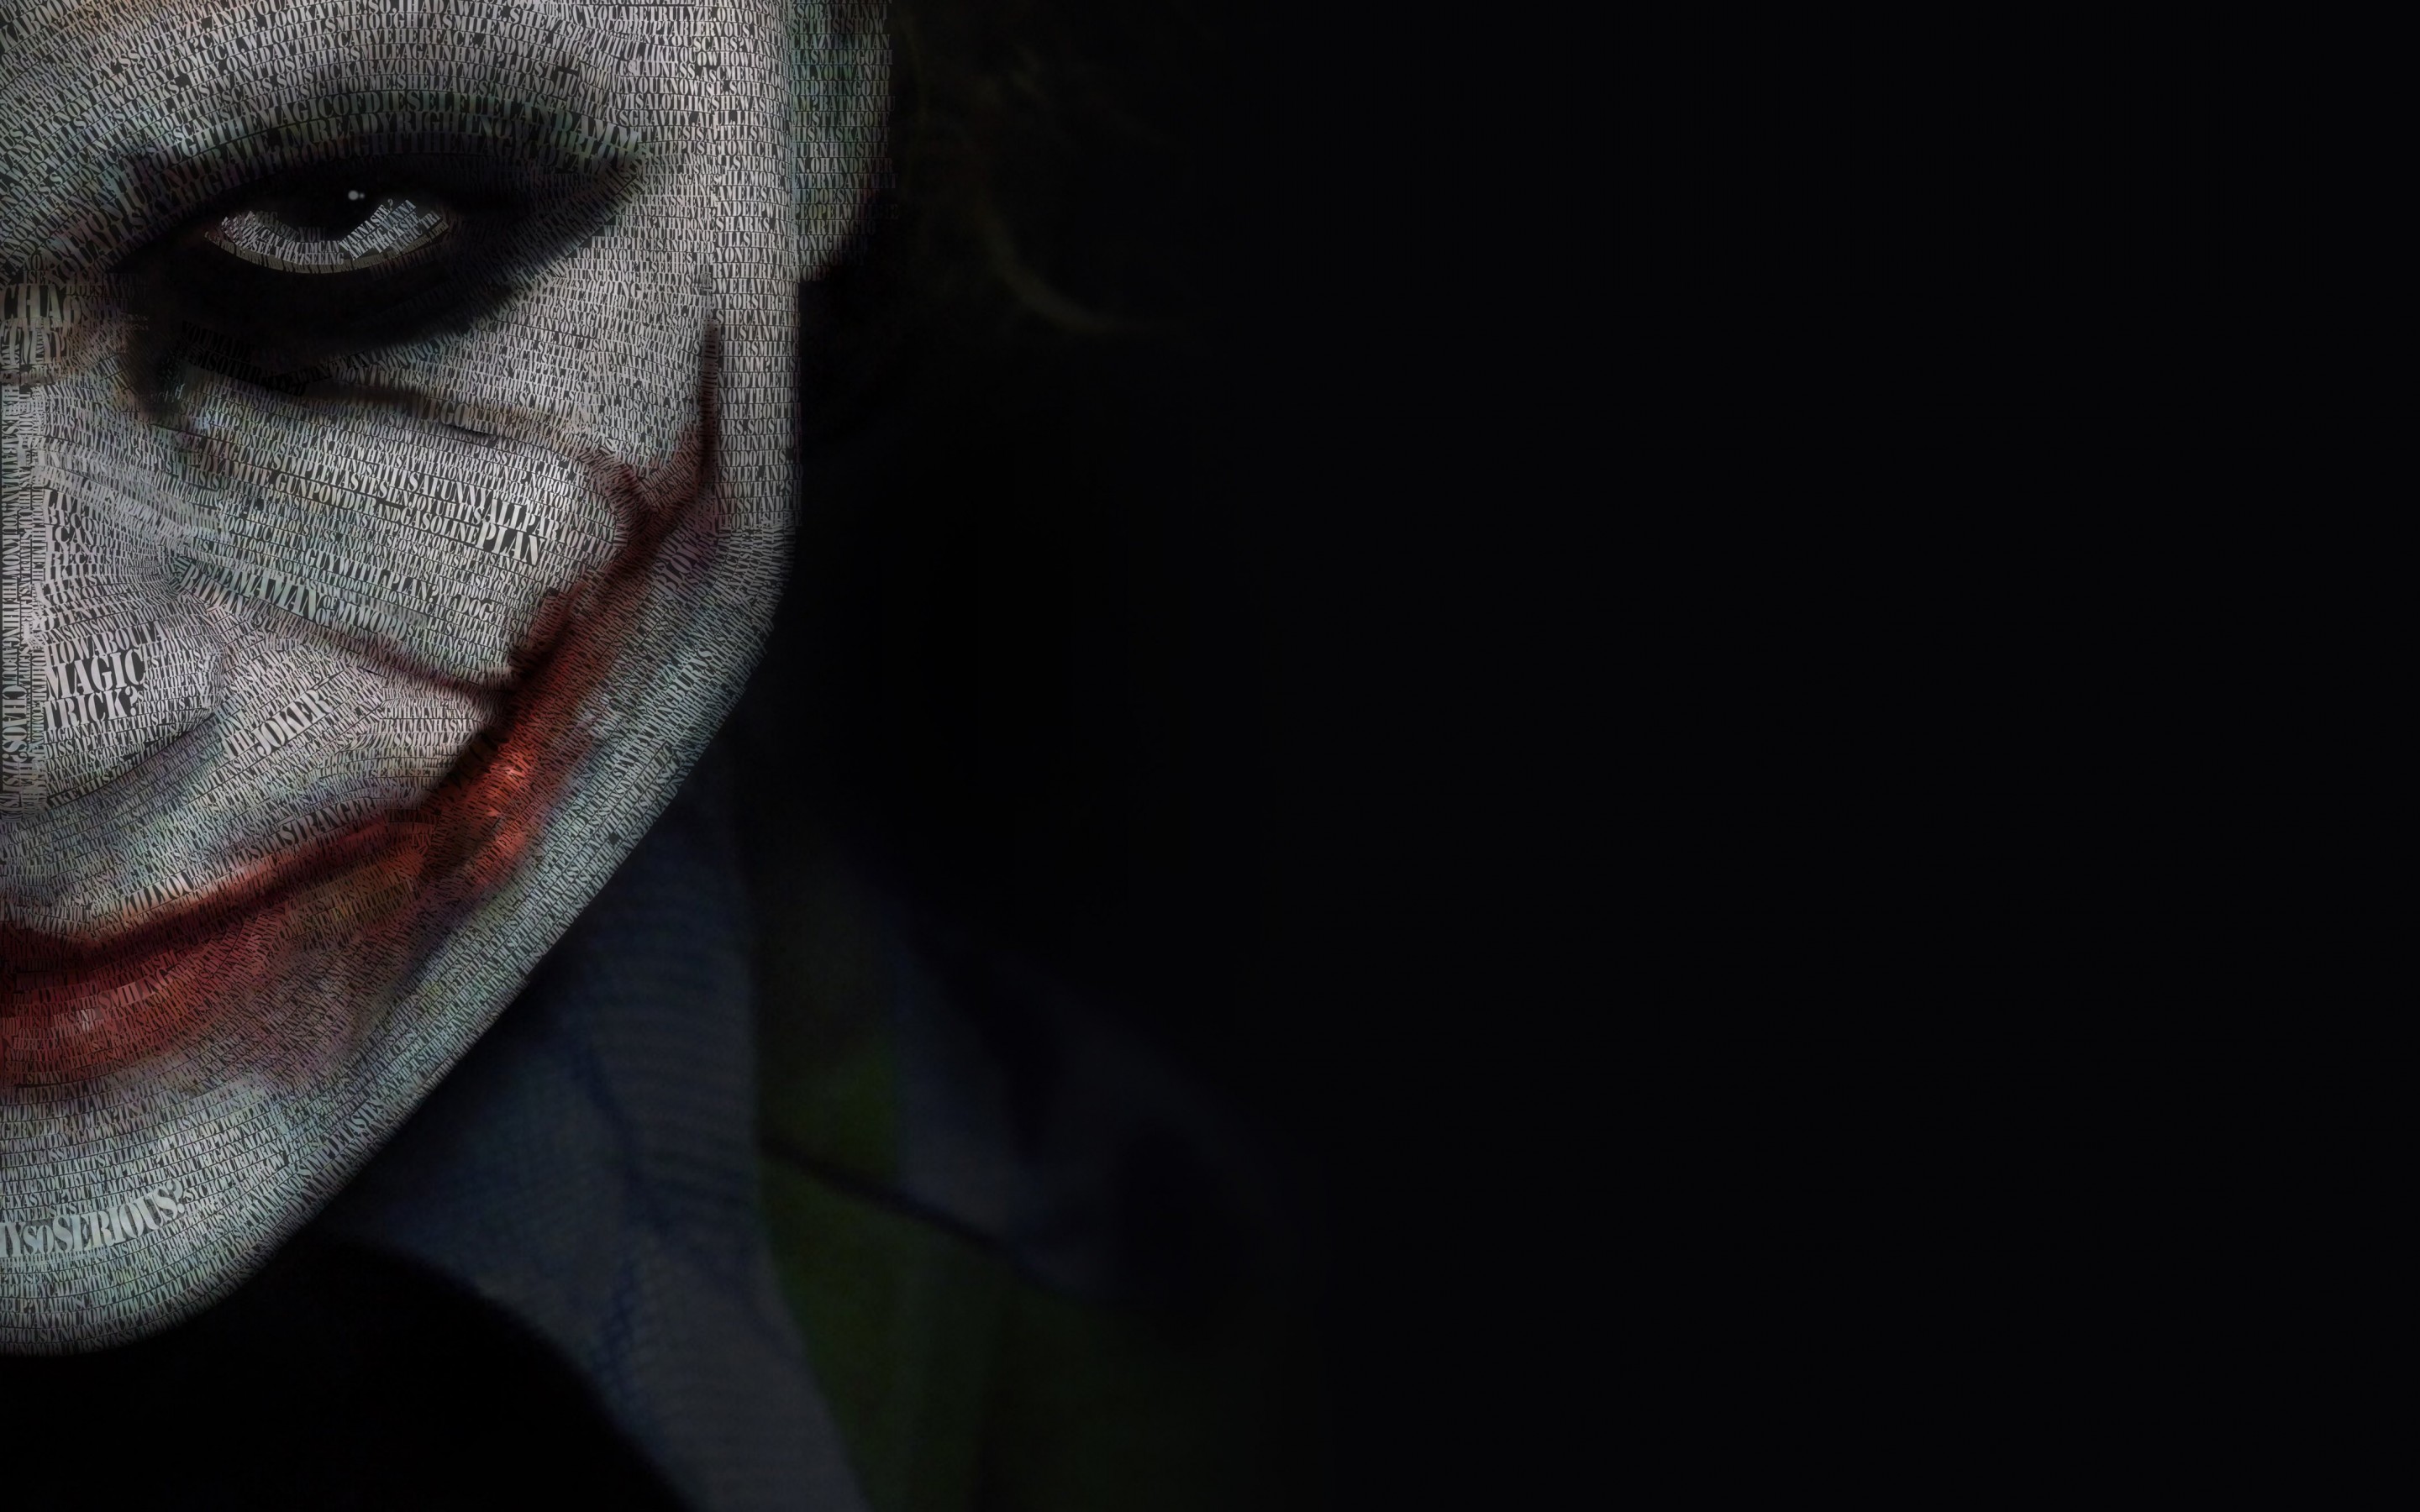 The Joker Typeface Portrait Wallpaper for Desktop 2880x1800